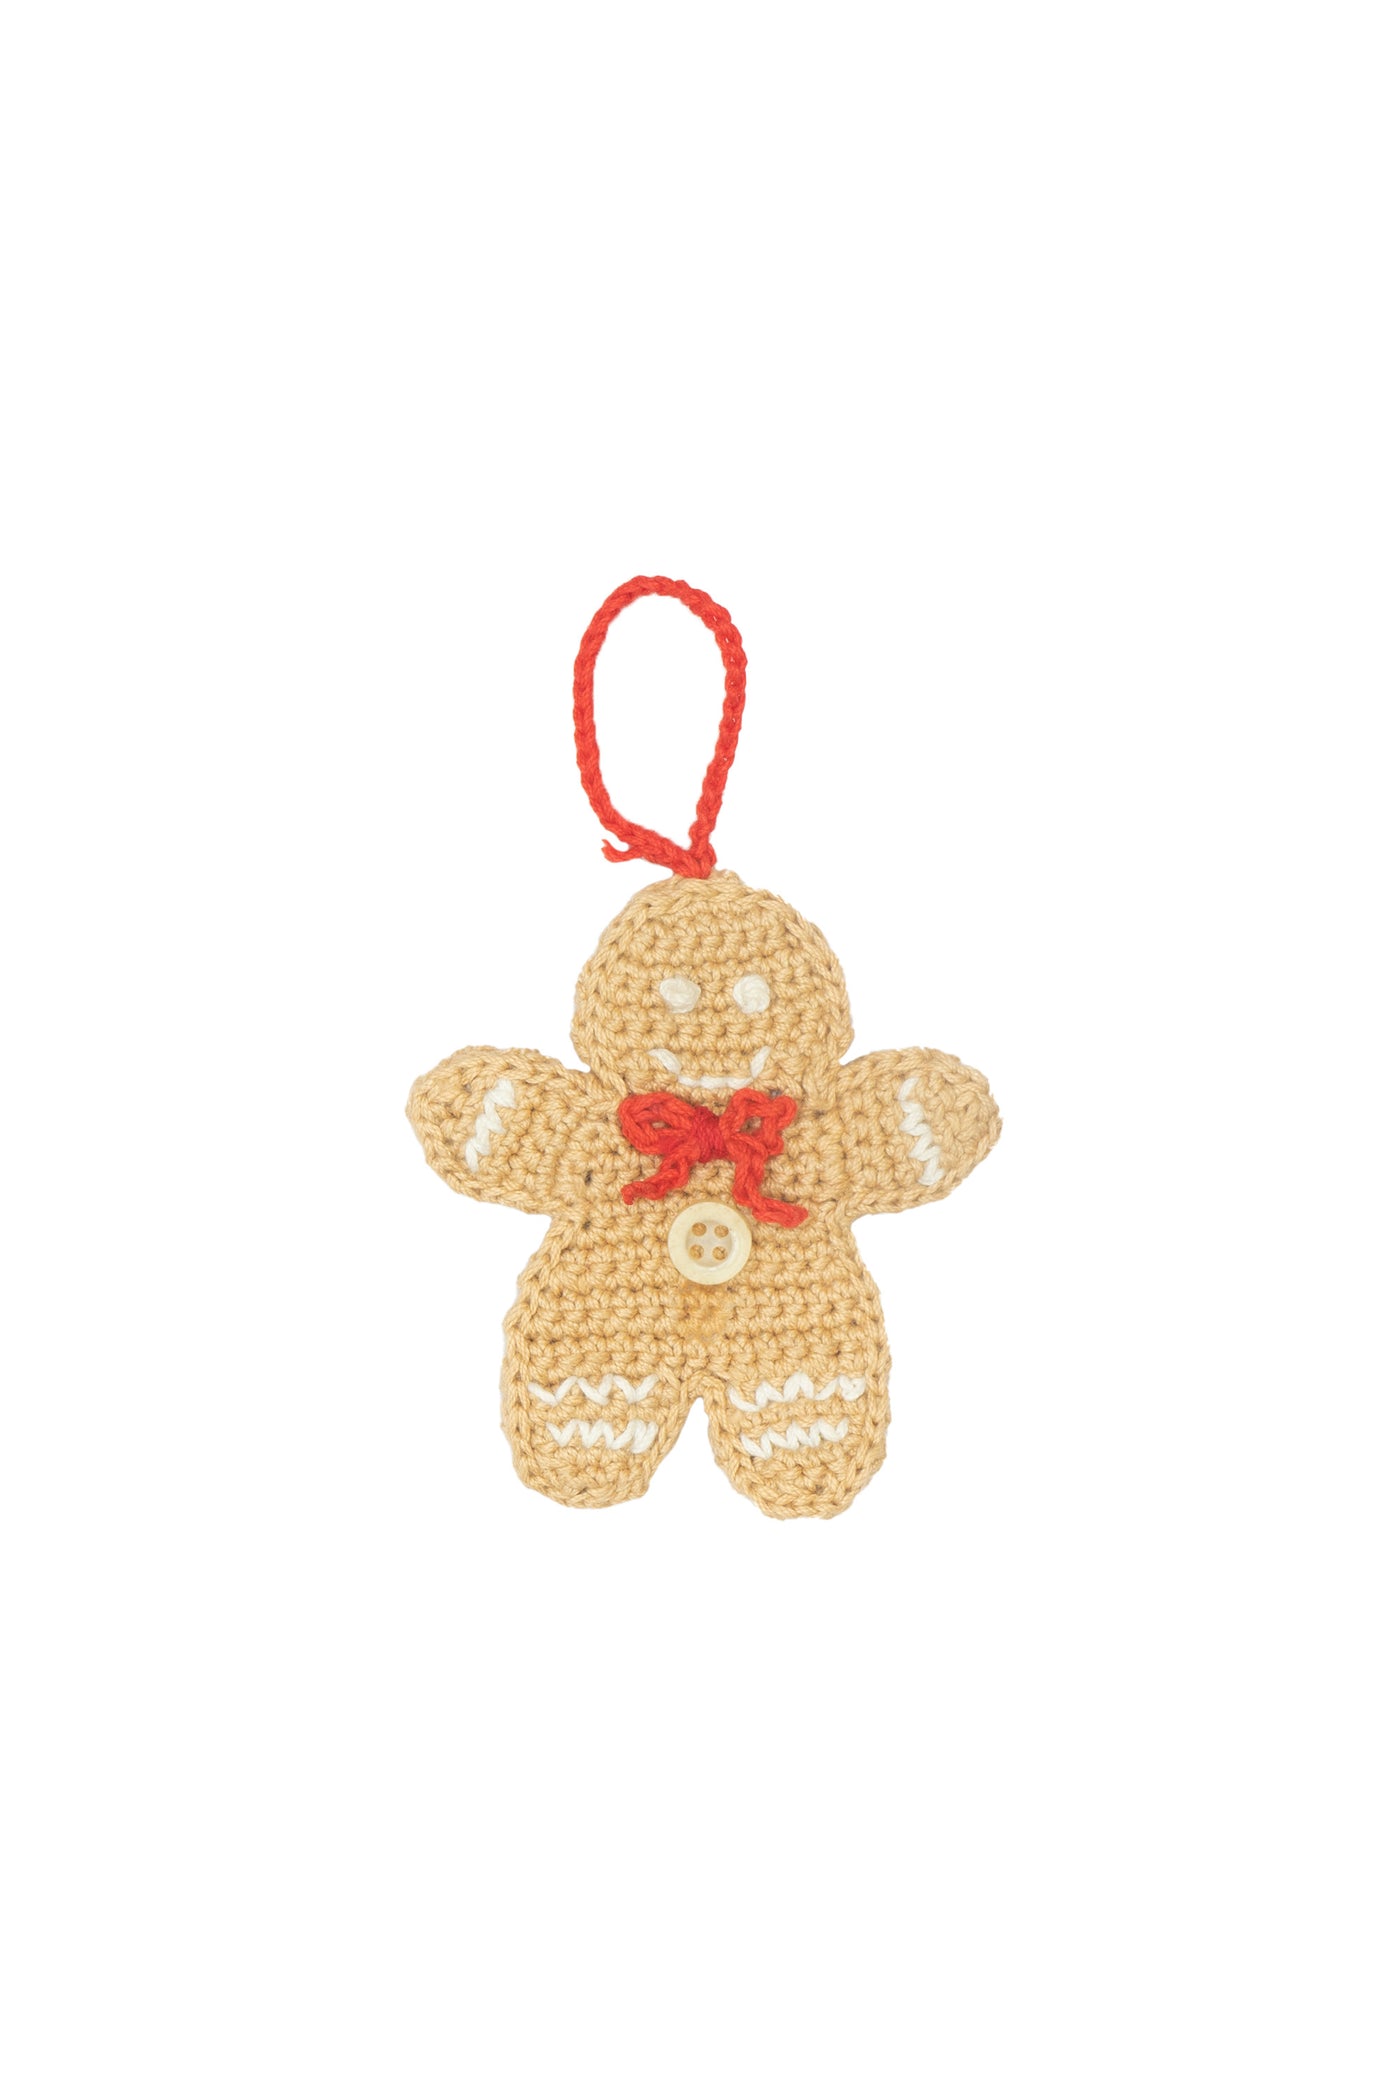 Handcrafted Amigurumi Christmas Tree Ornament-
Gingerbread man